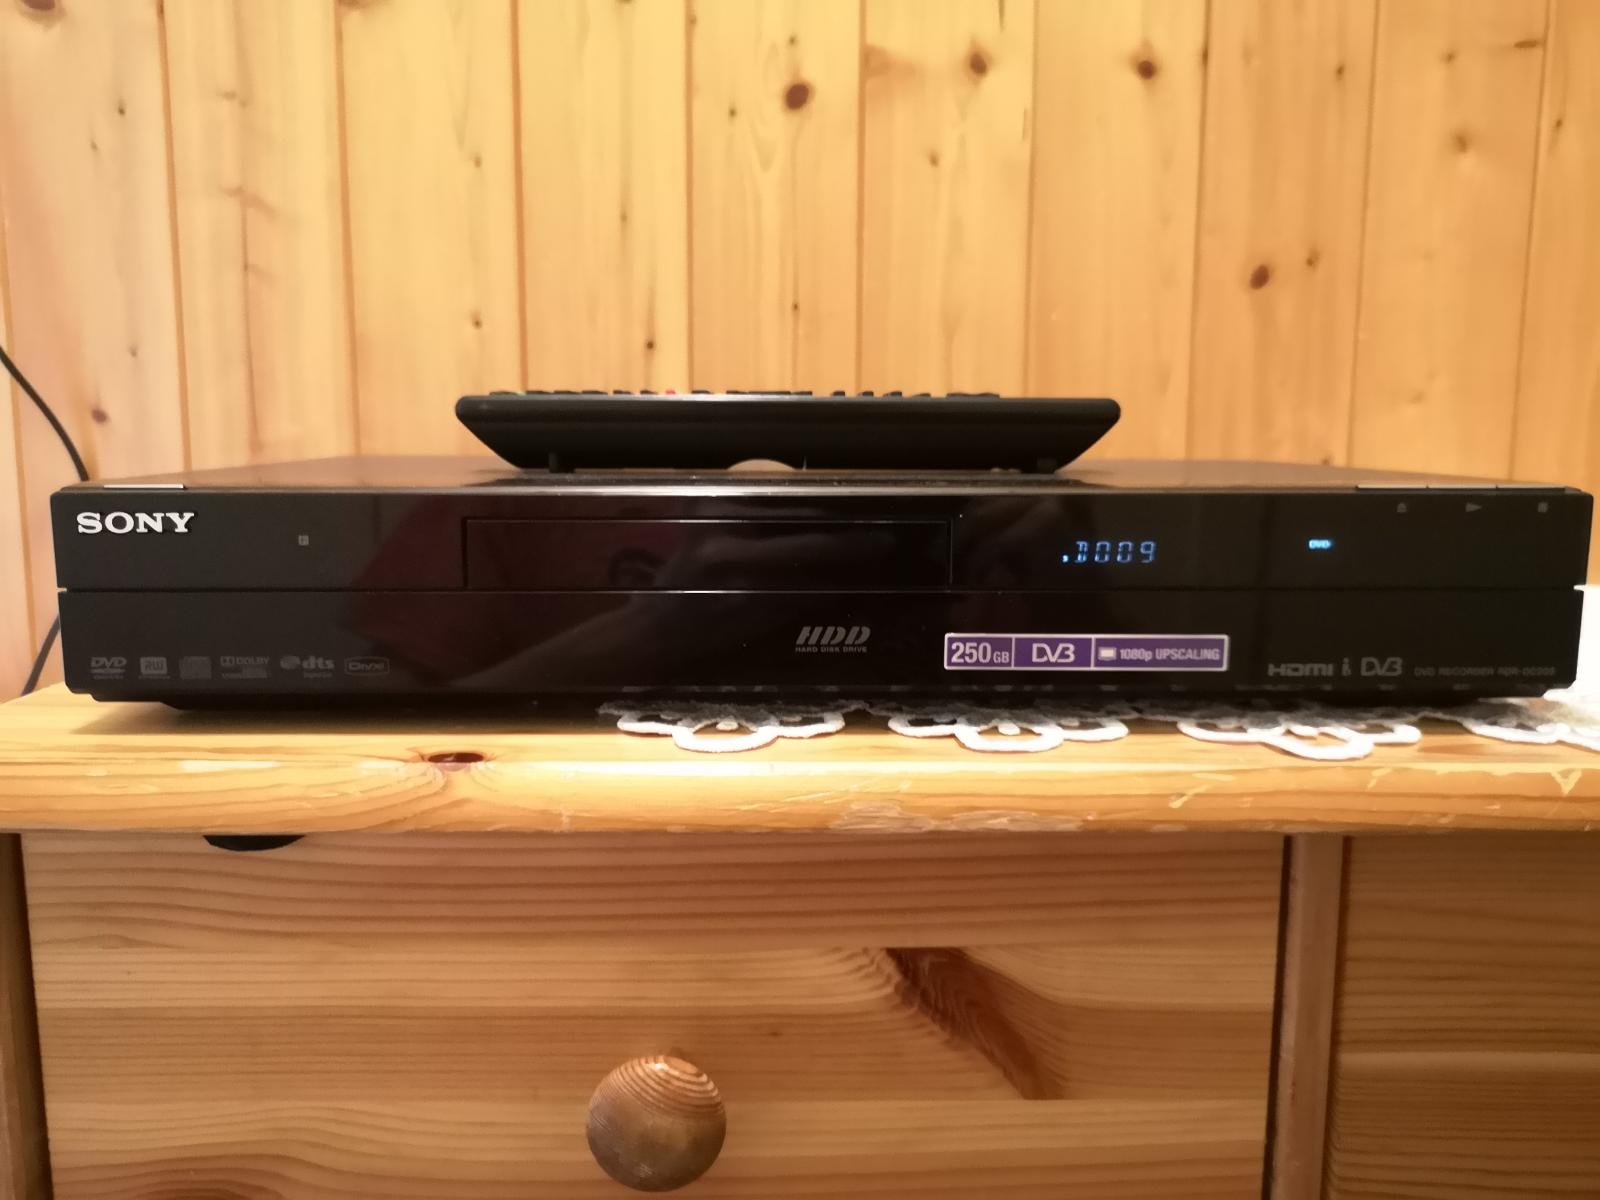 Sony DVD recorder RDR-DC205 - TV, audio, video